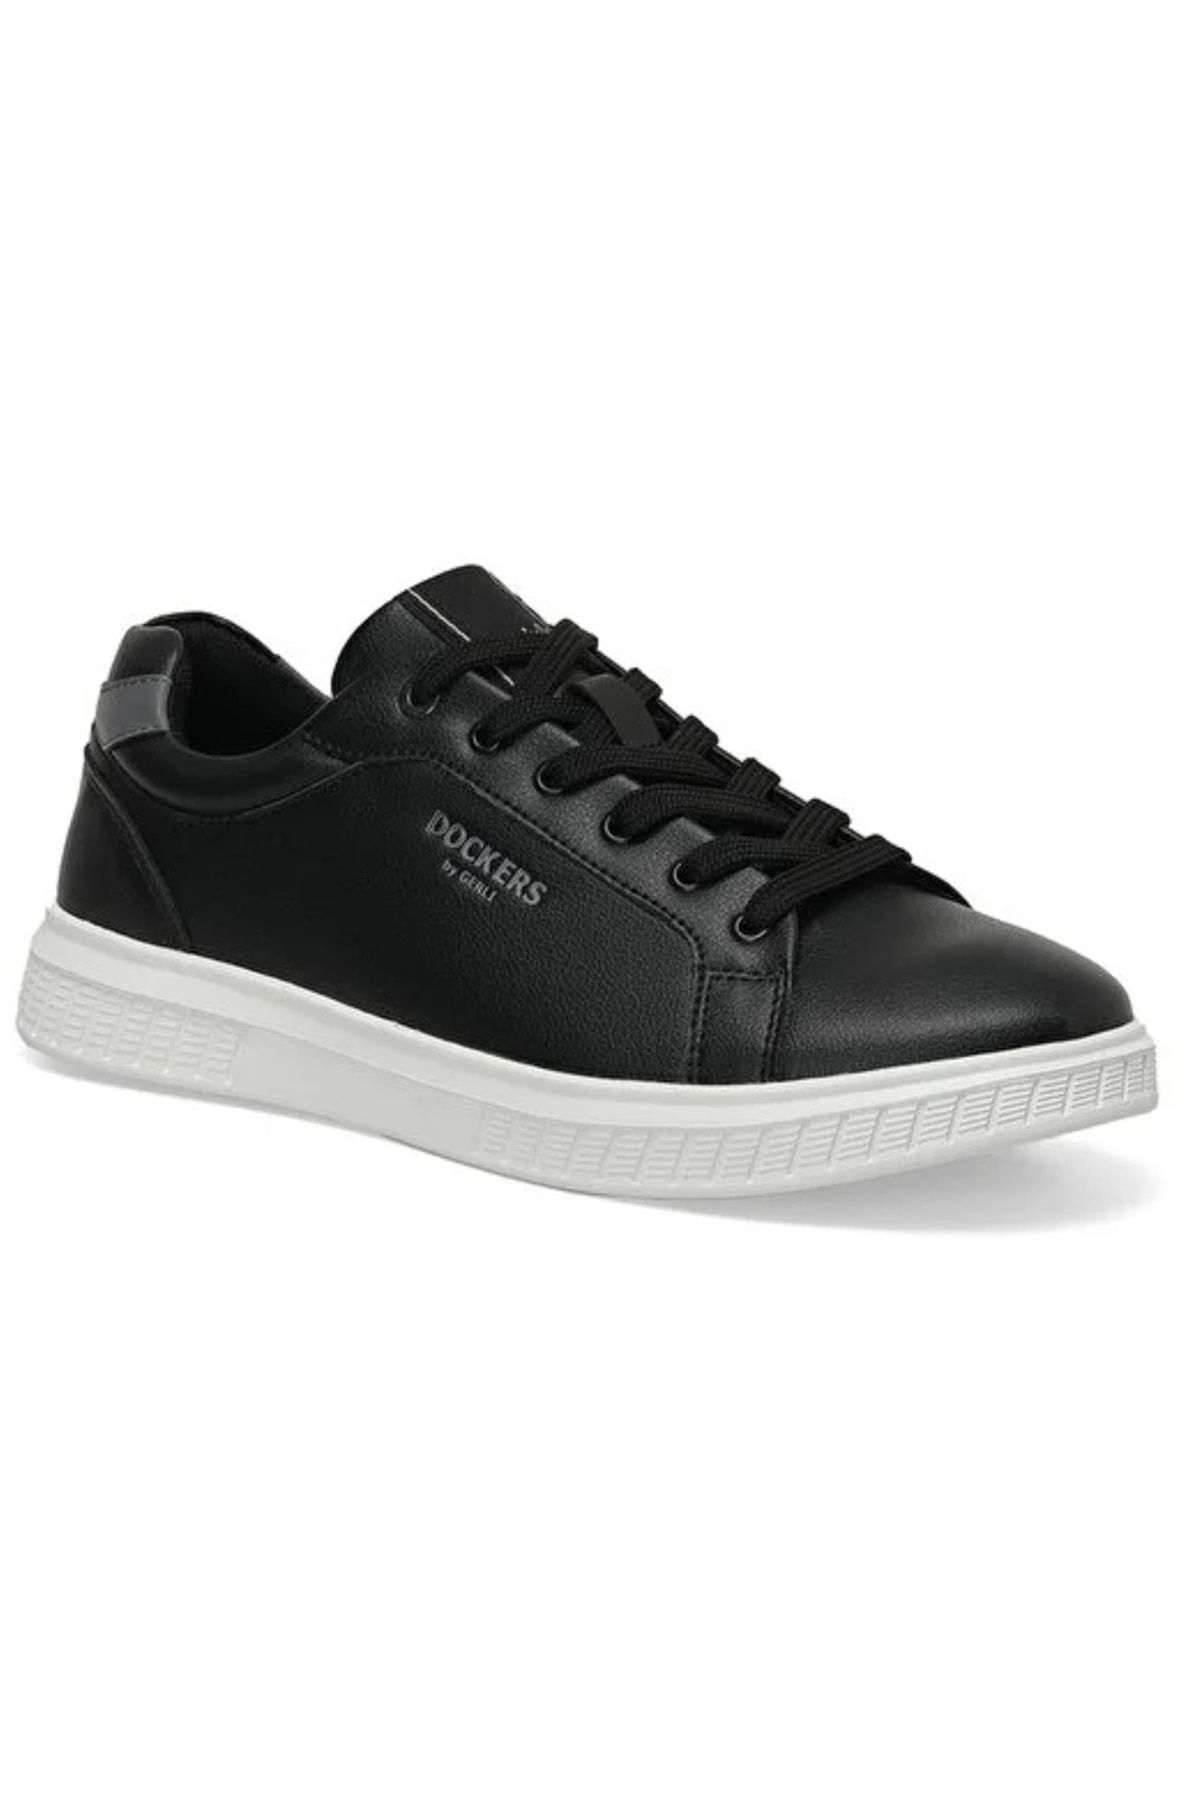 Dockers 236216 Sneaker Erkek Spor Ayakkabı Siyah